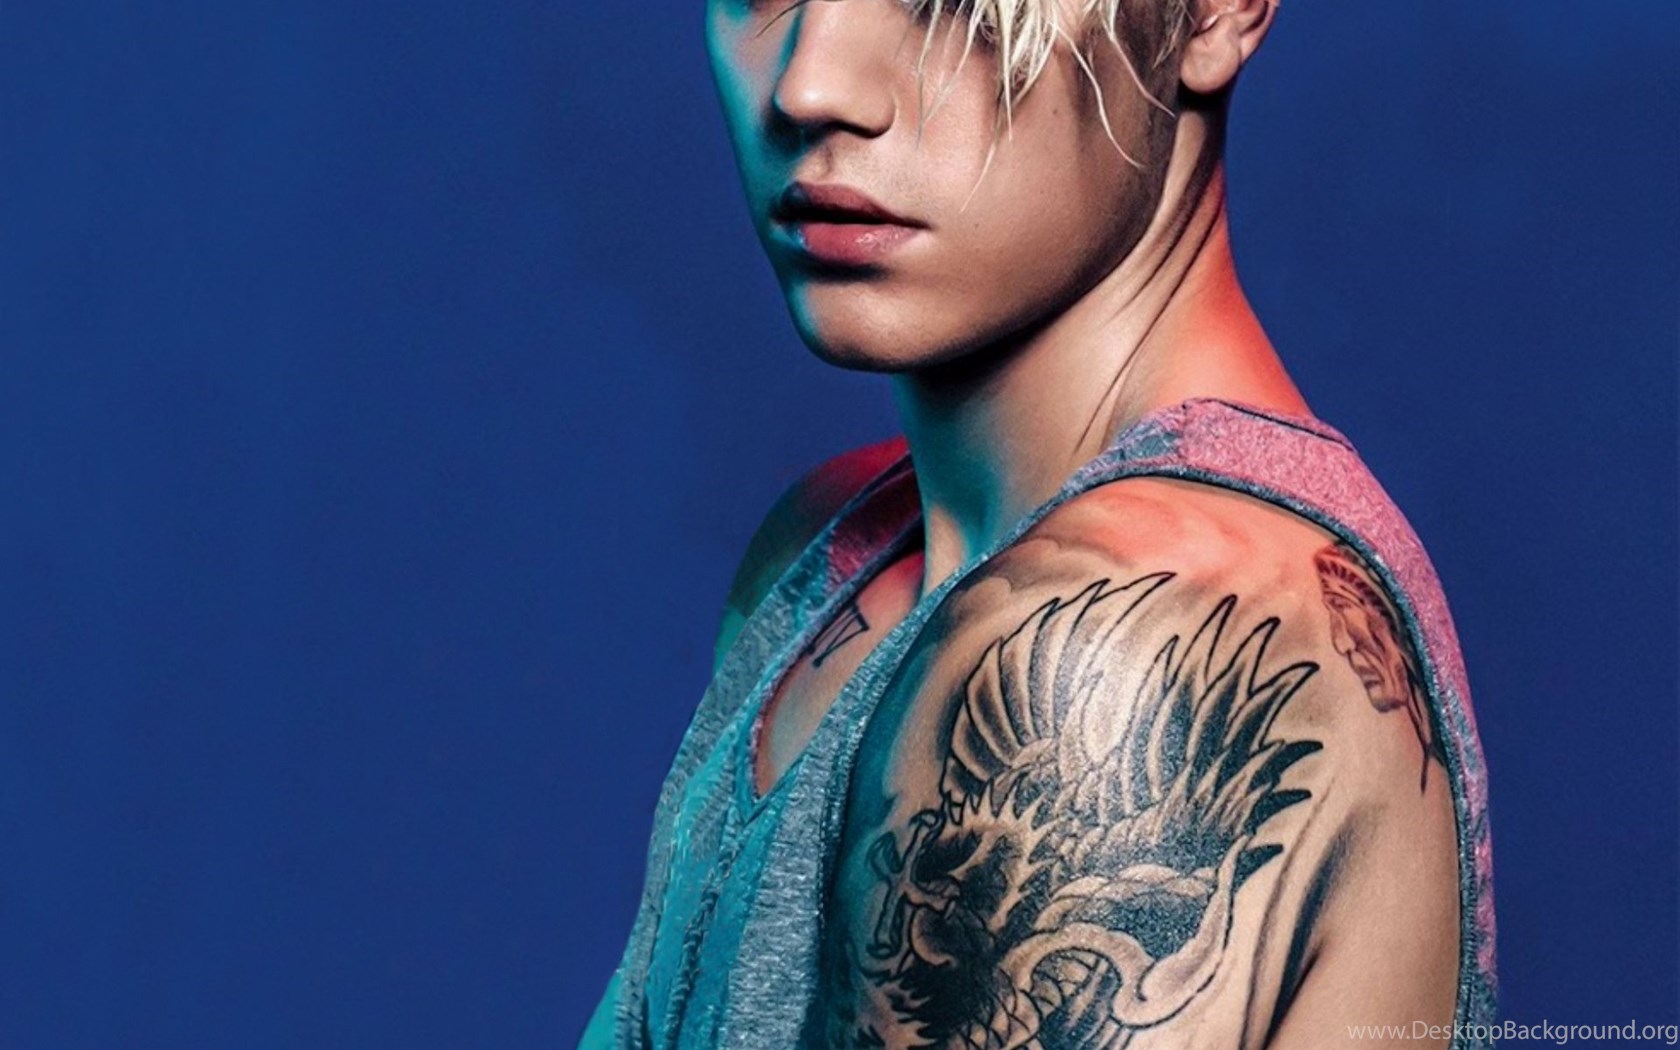 Men's Haircut Tutorial - Justin Bieber NEW Undercut - TheSalonGuy - YouTube